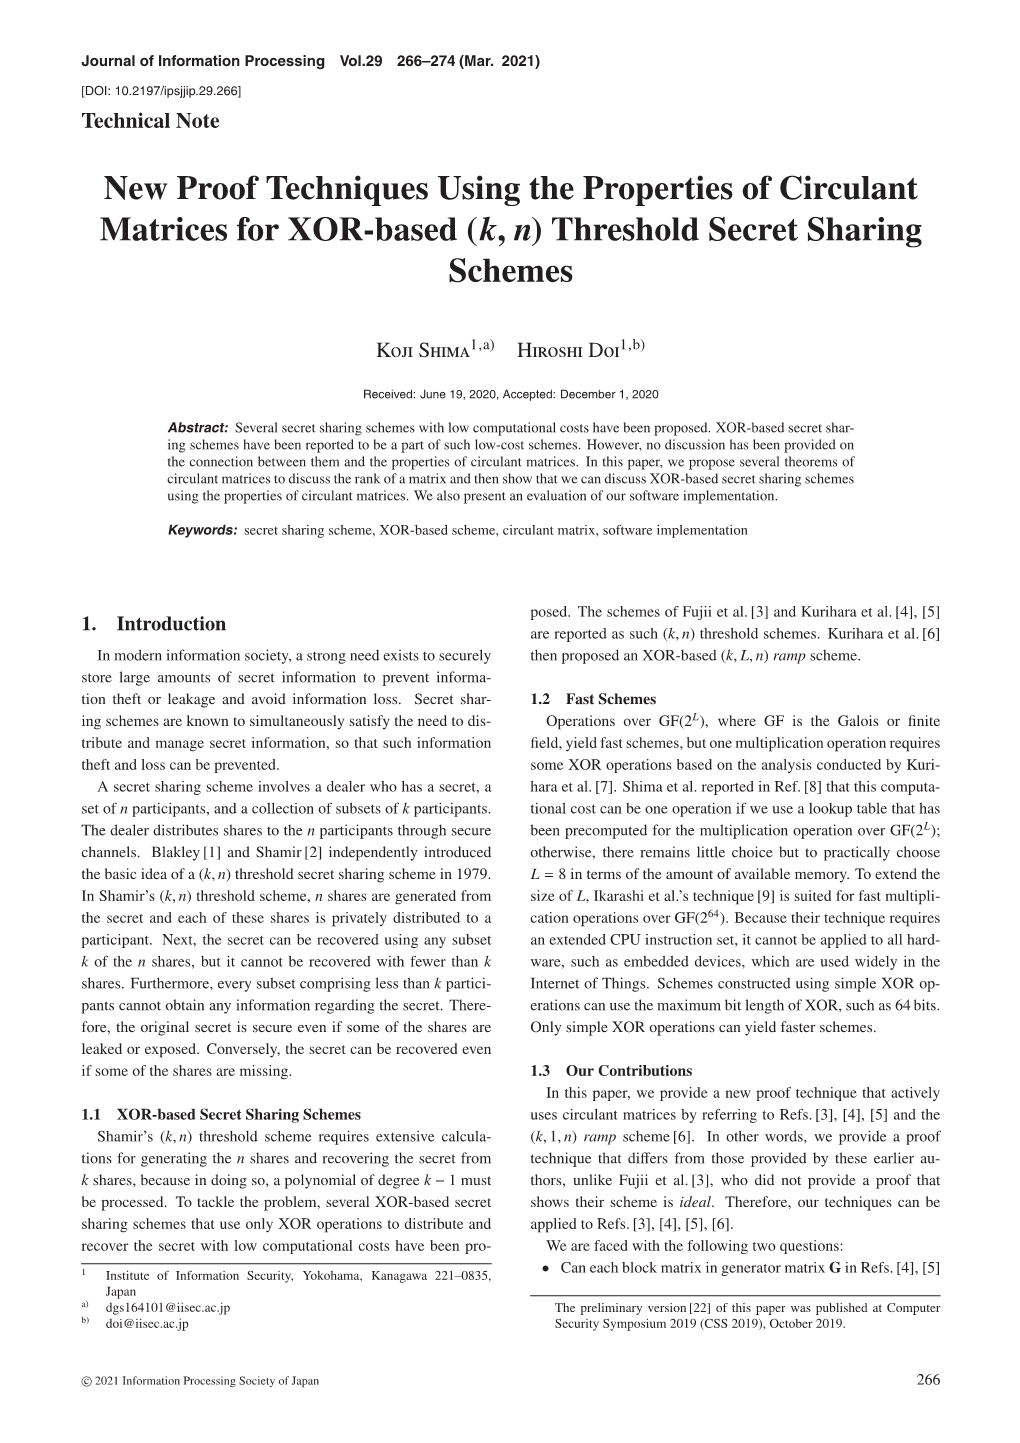 (K, N) Threshold Secret Sharing Schemes